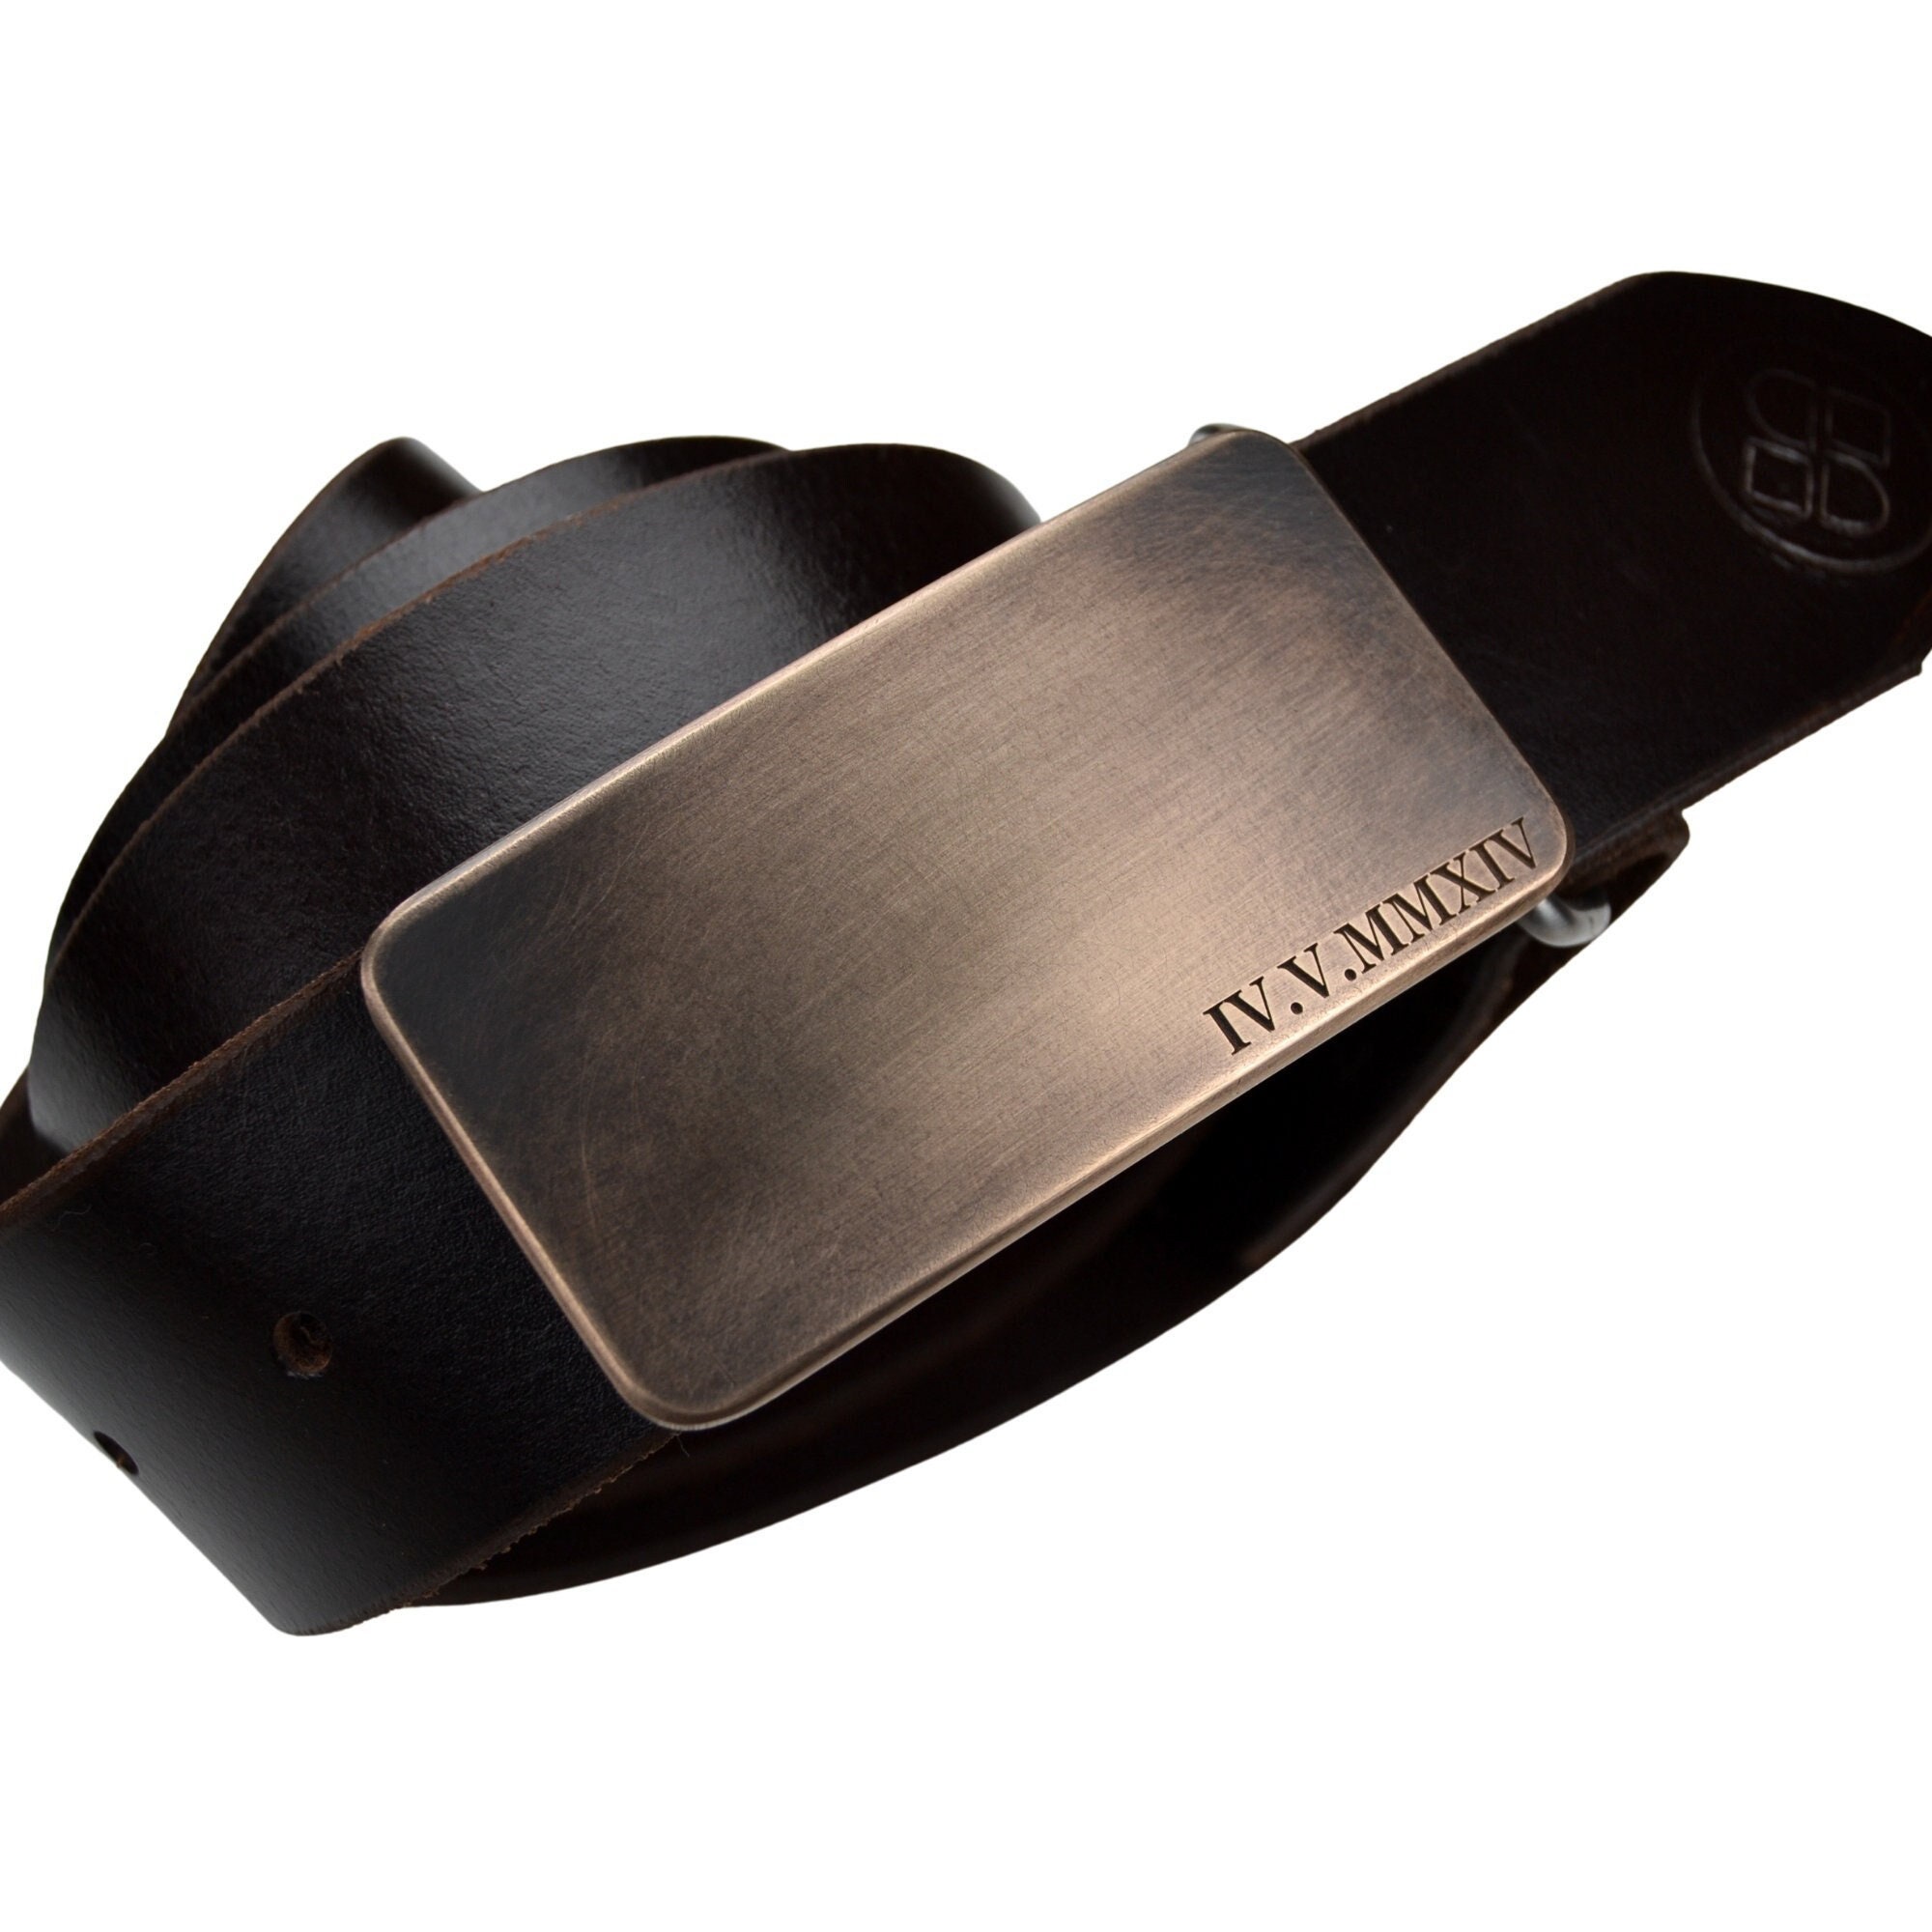 Matte Black Leather Belt, Made in Seattle